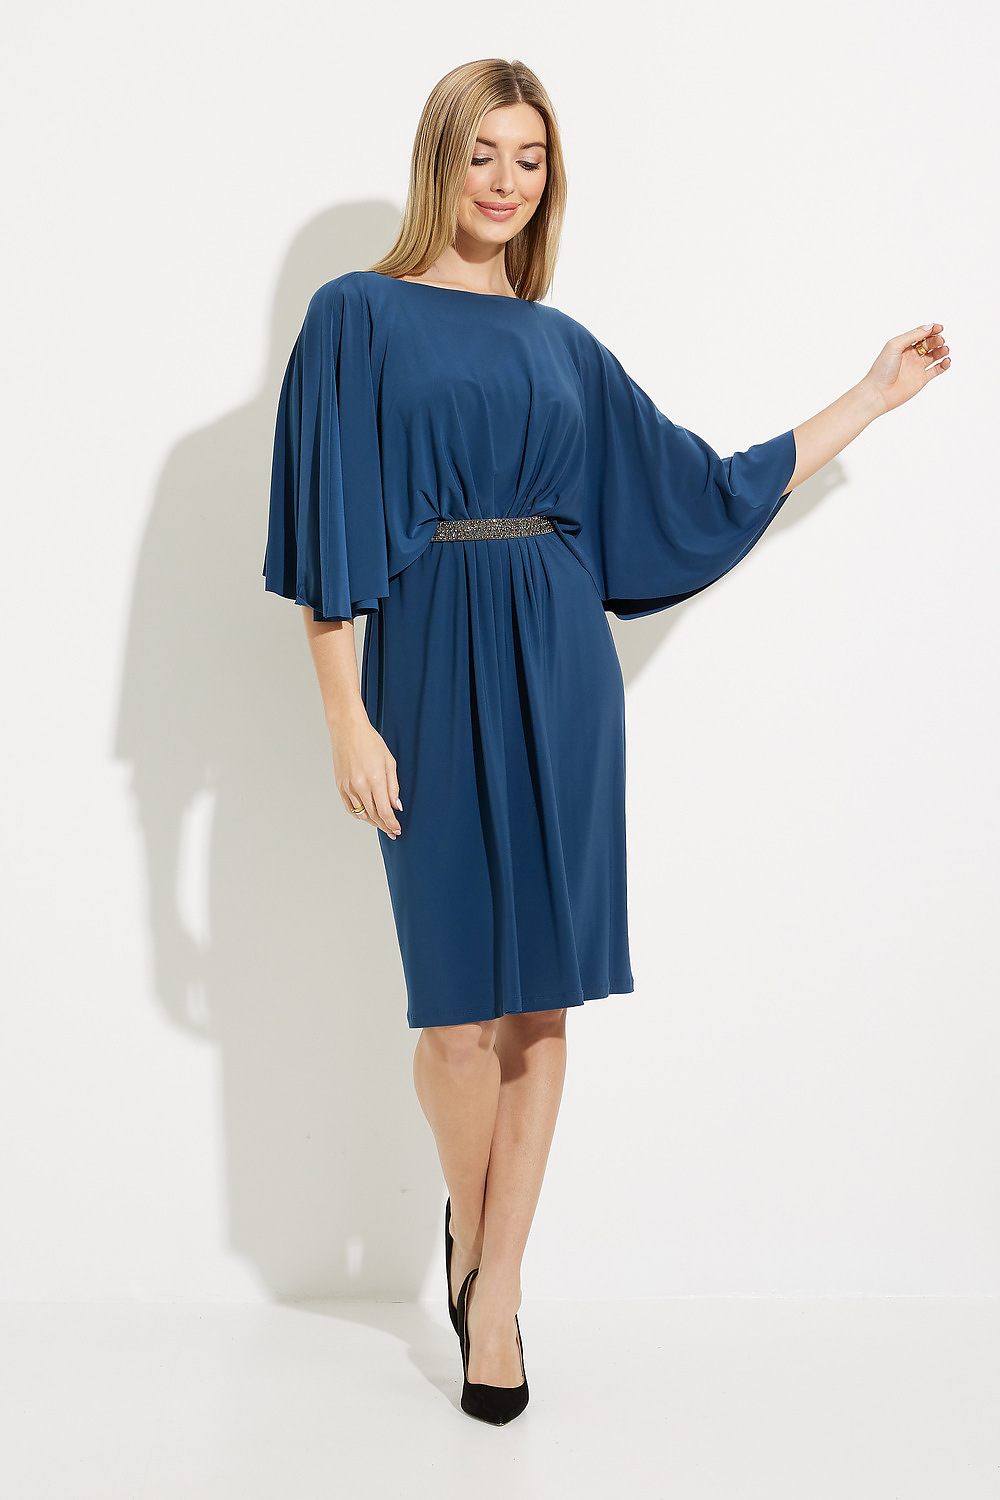 Joseph Ribkoff Flutter Sleeve Dress Style 224257. Nightfall